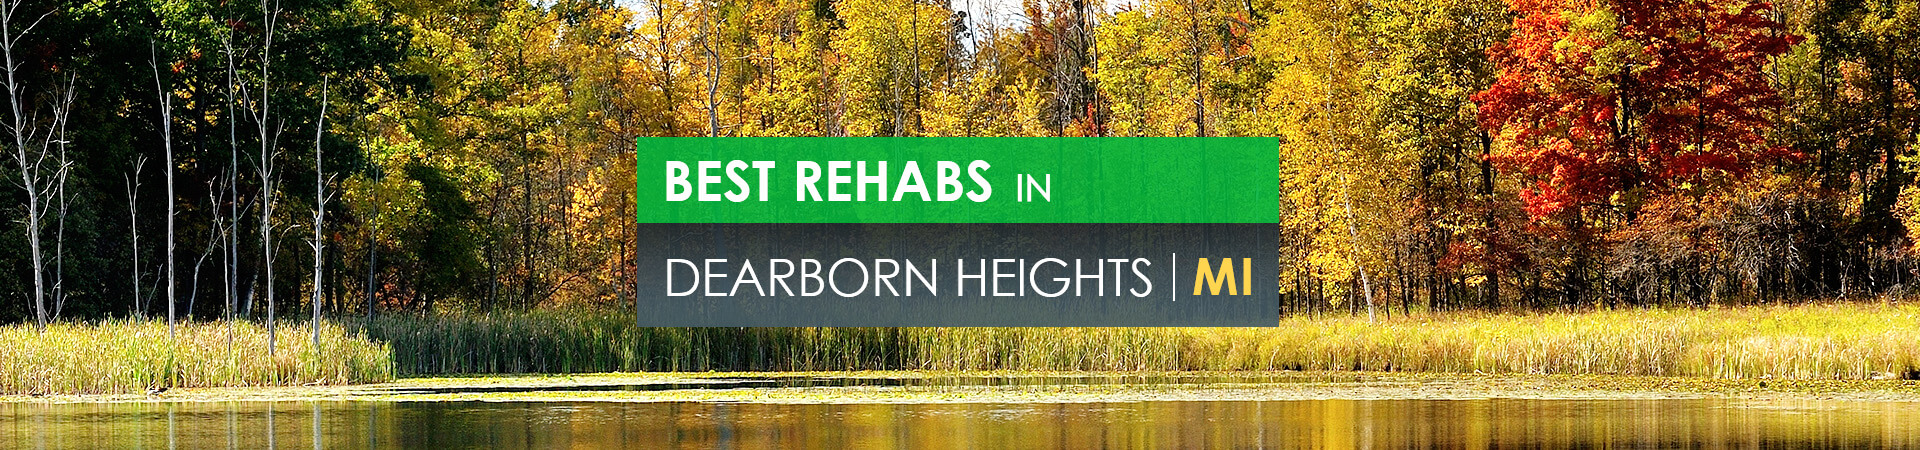 Best rehabs in Dearborn Heights, MI